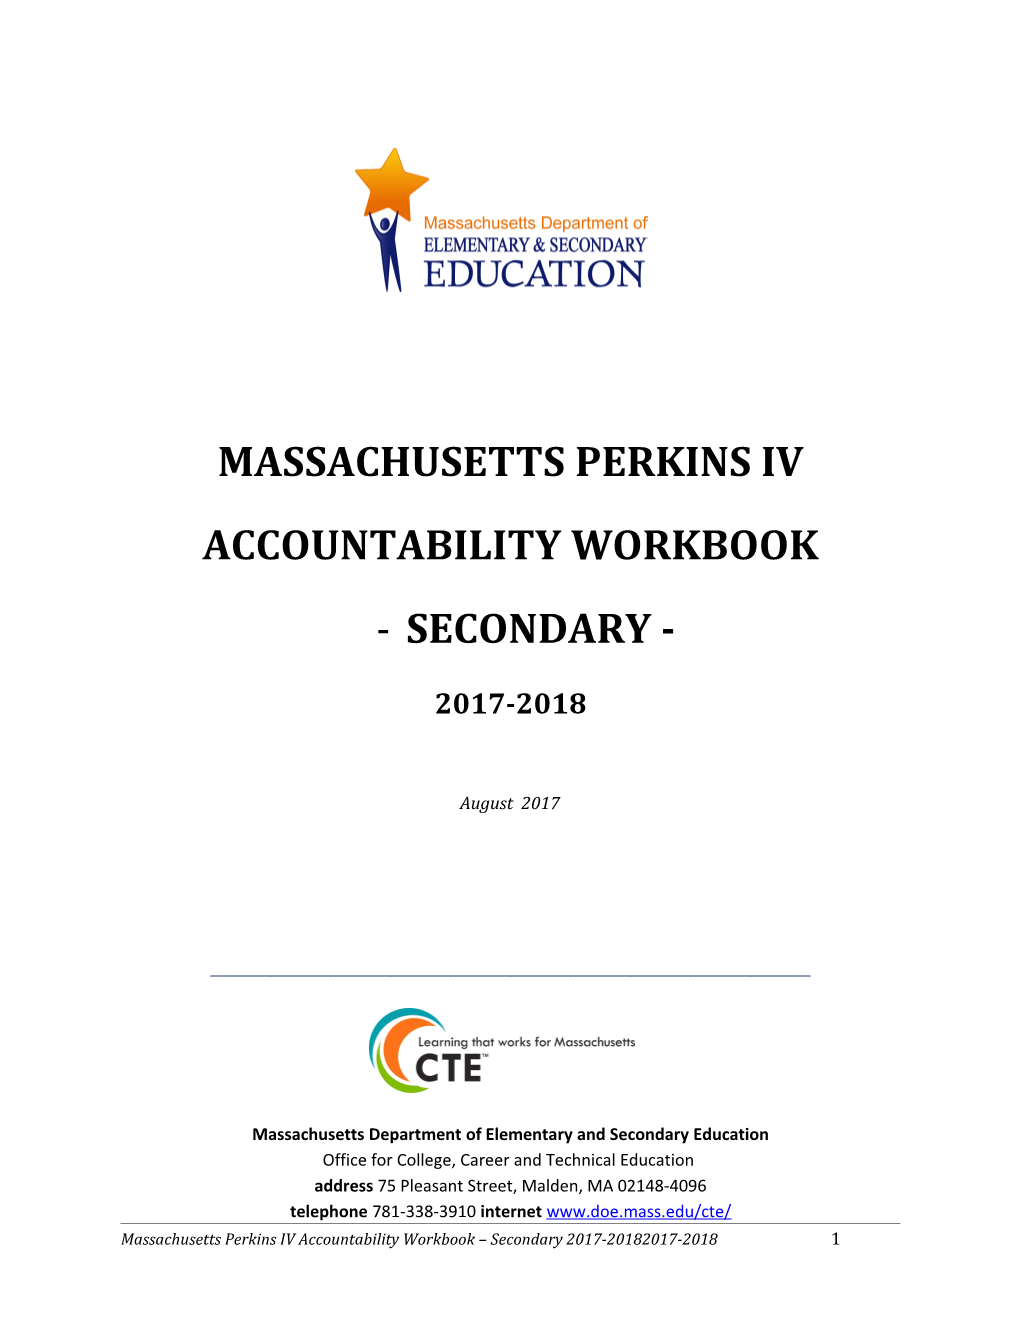 MA Perkins IV Accountability Workbook - Secondary 2017-2018